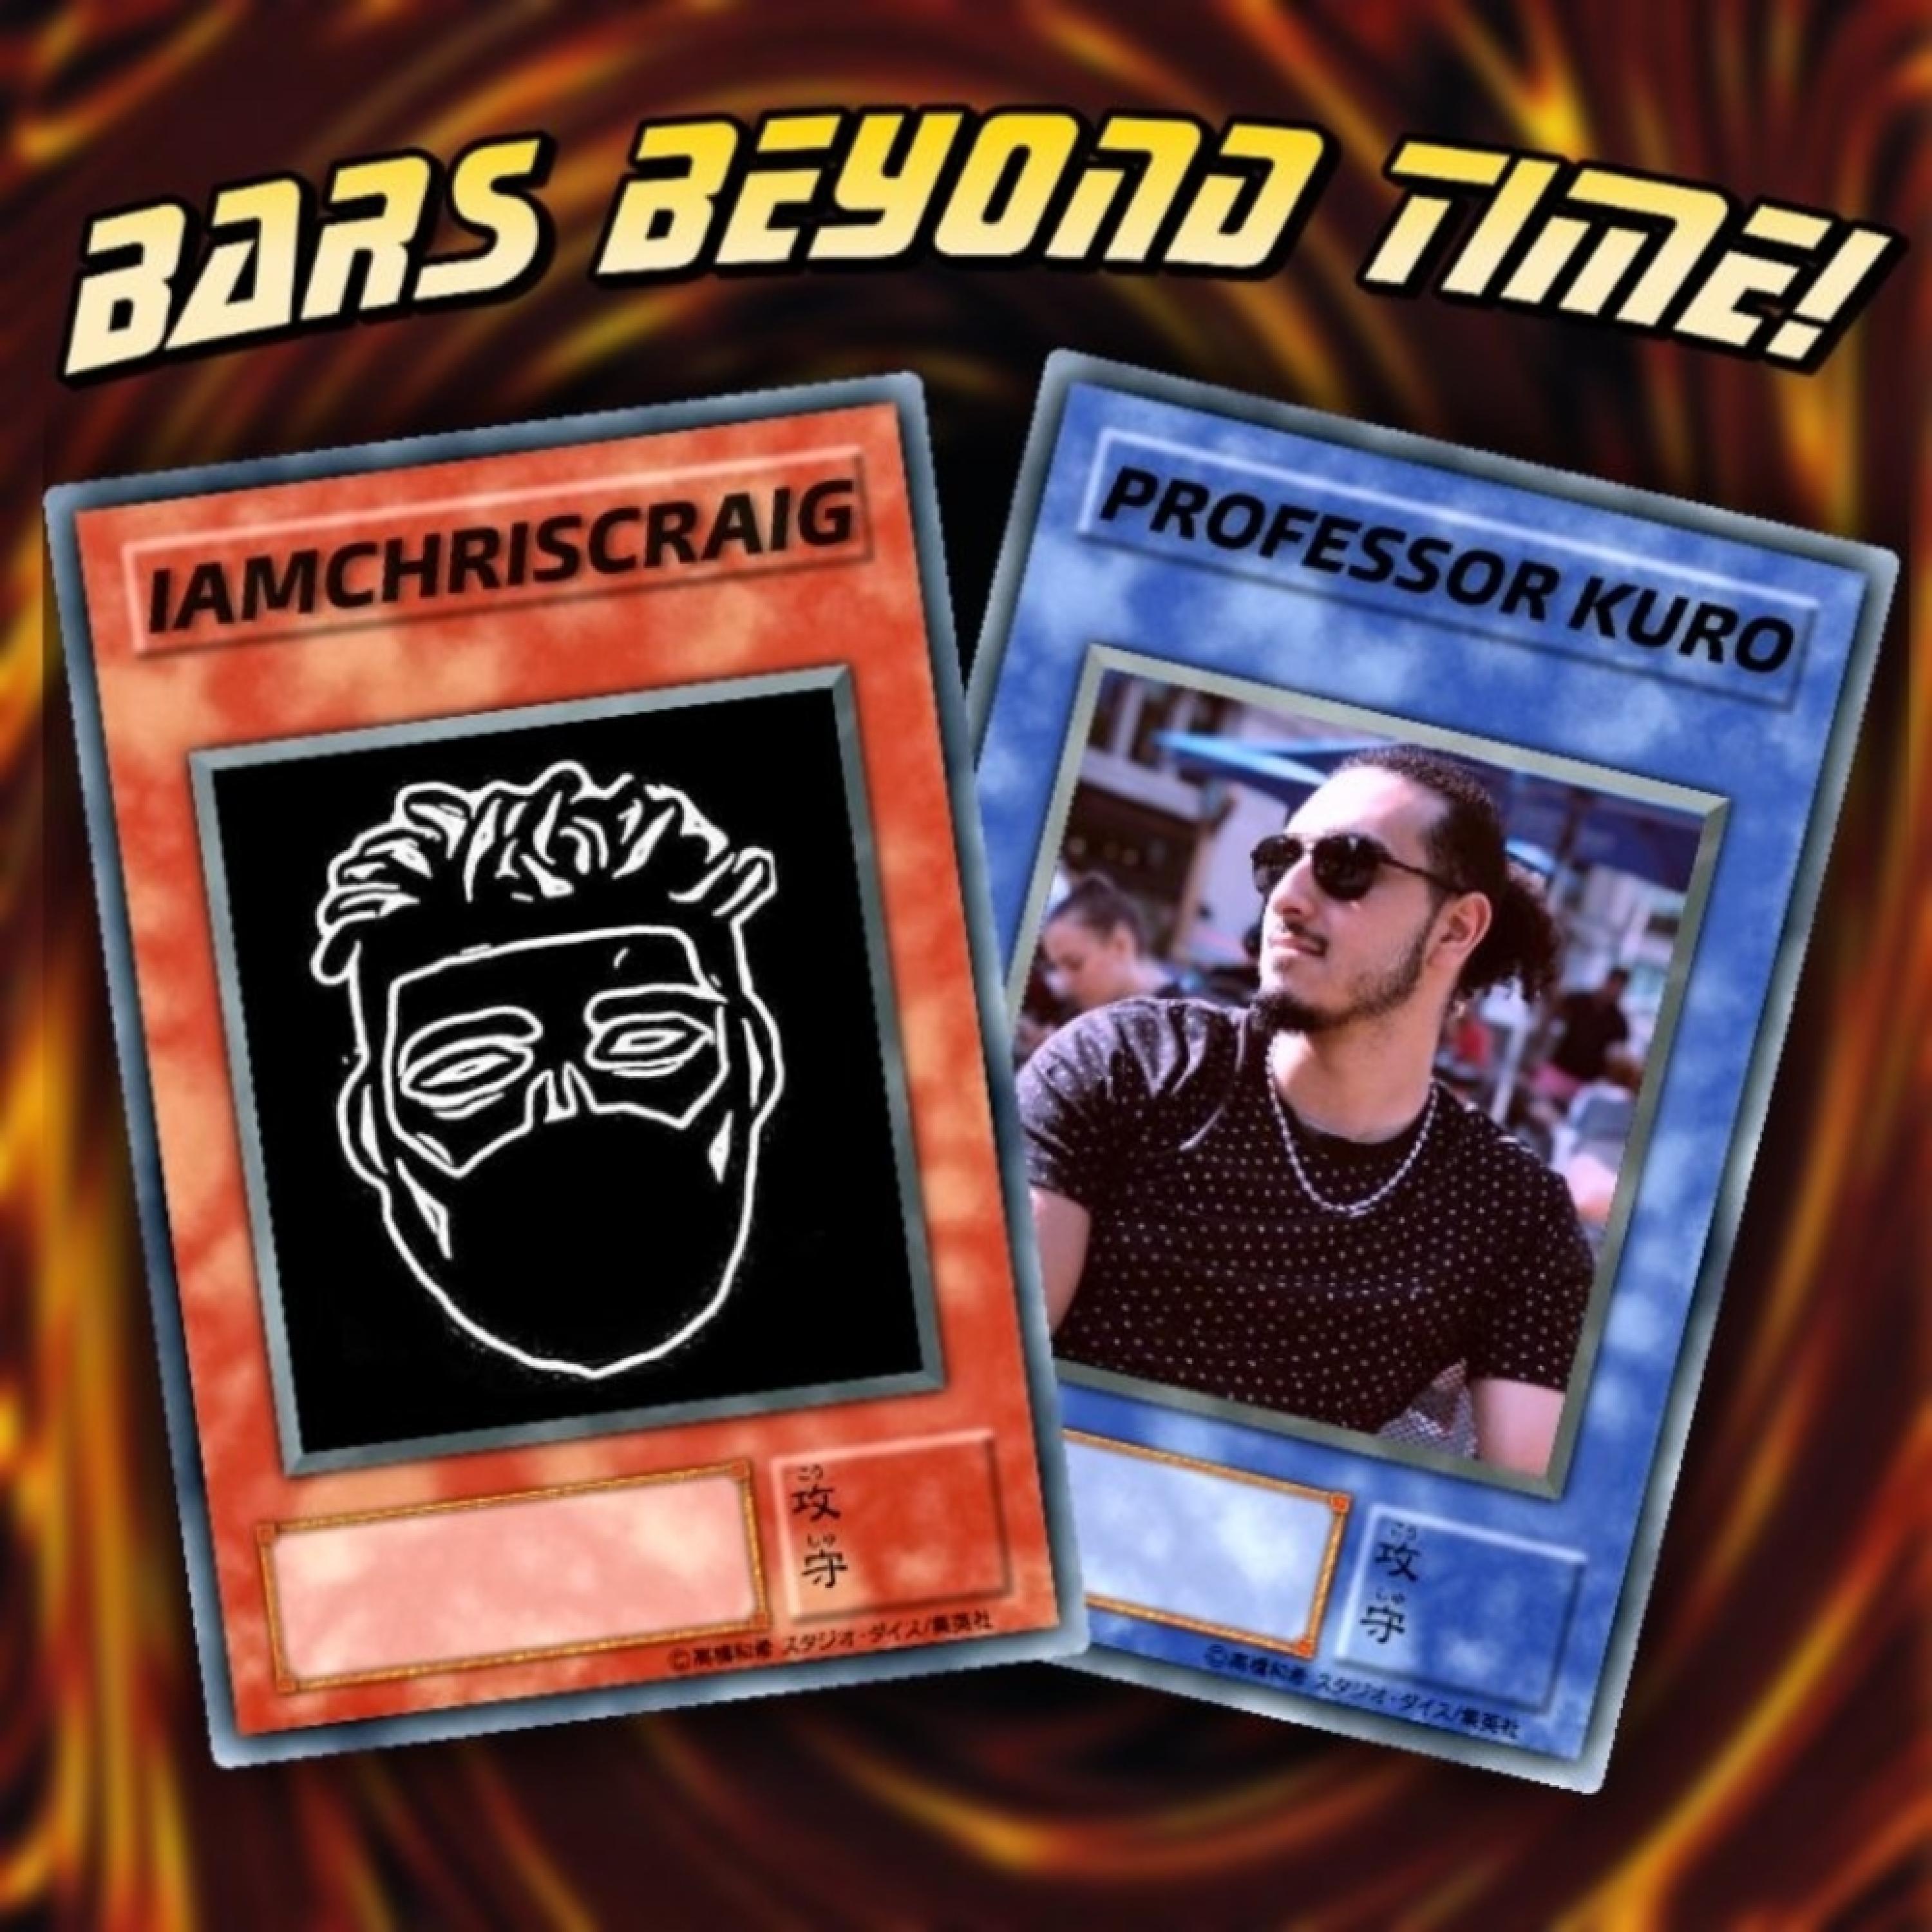 IAMCHRISCRAIG - Bars Beyond Time! (feat. Professor Kuro)